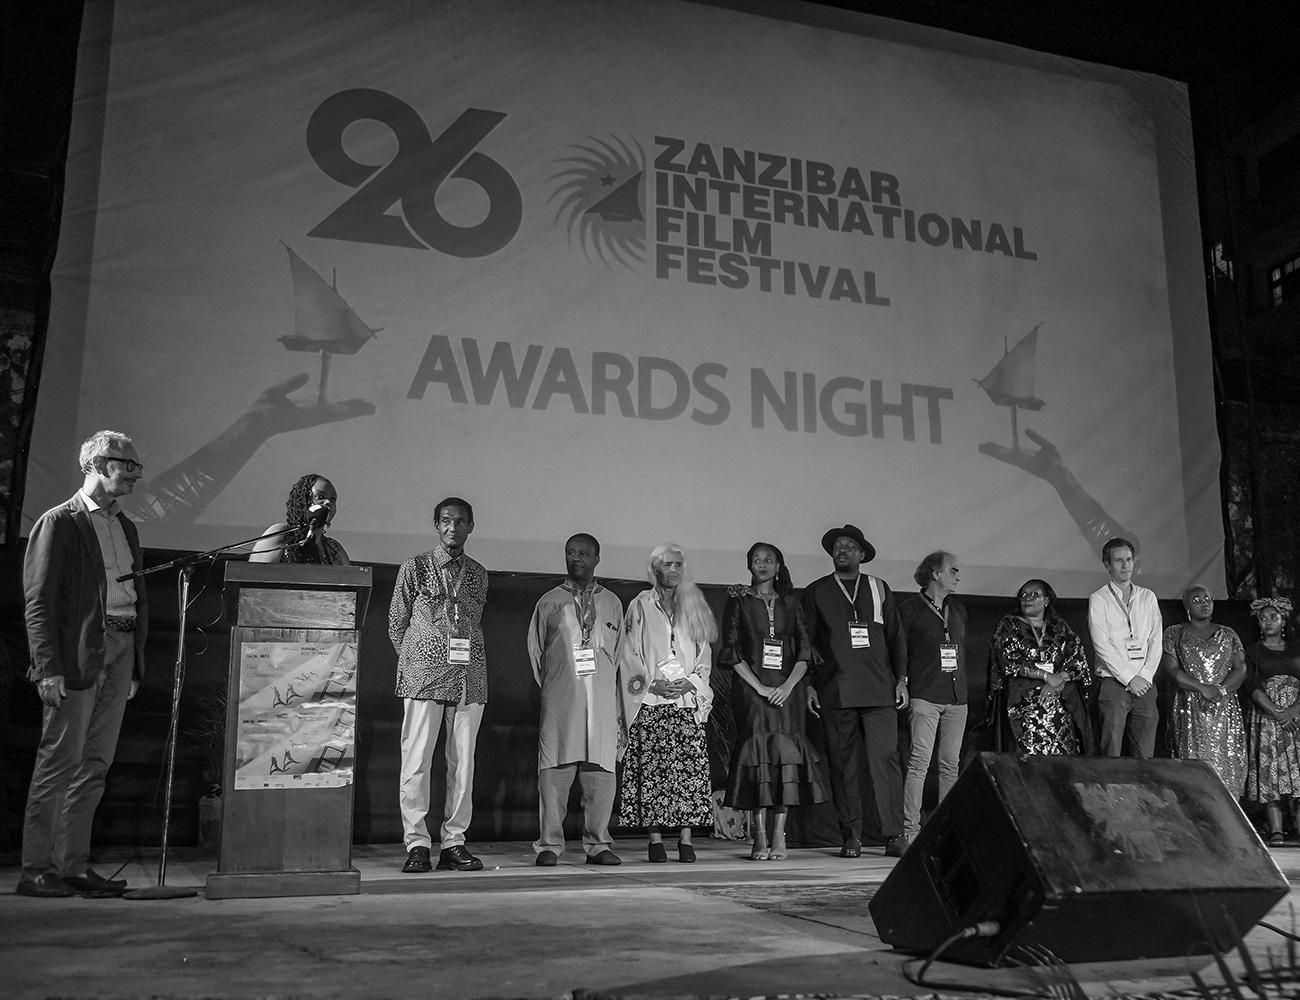 Awards at Zanzibar International Film Festival